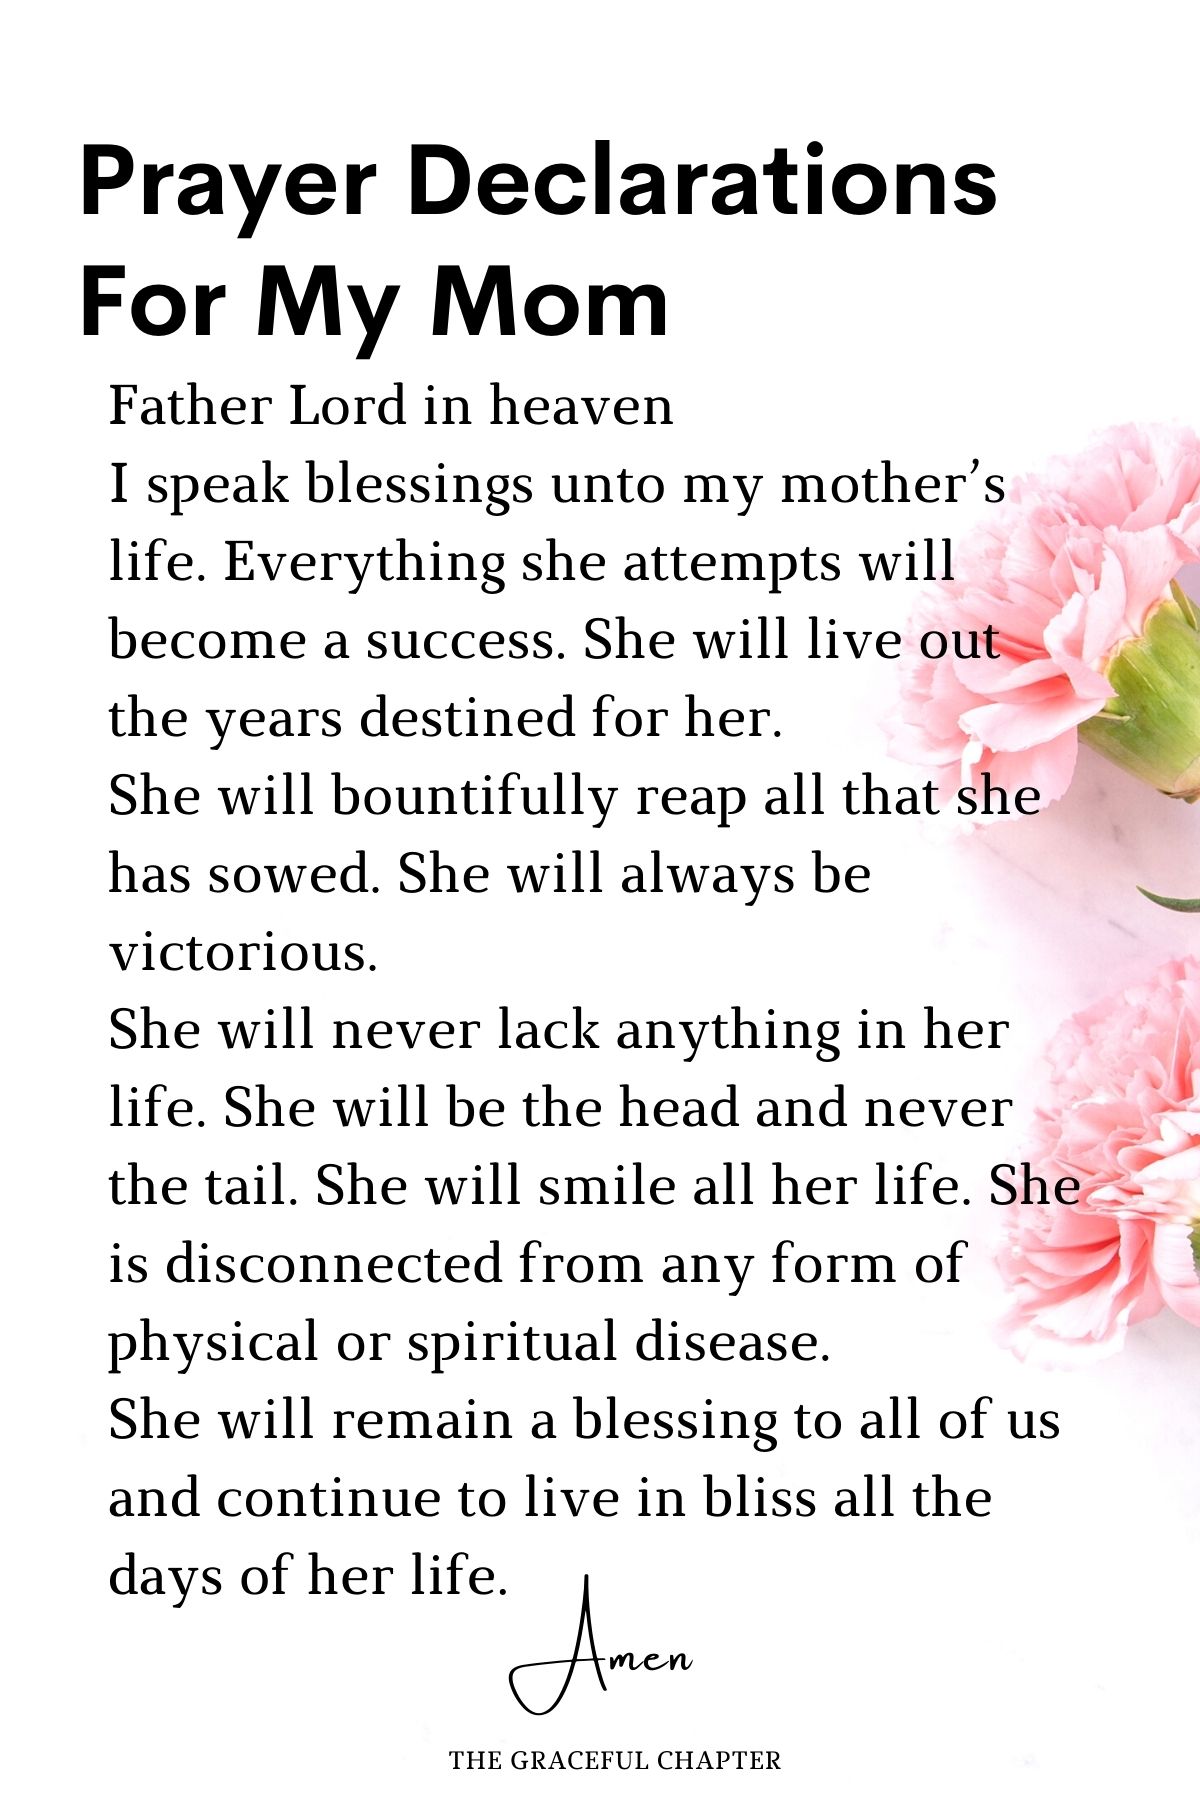 Prayer declarations for my mom